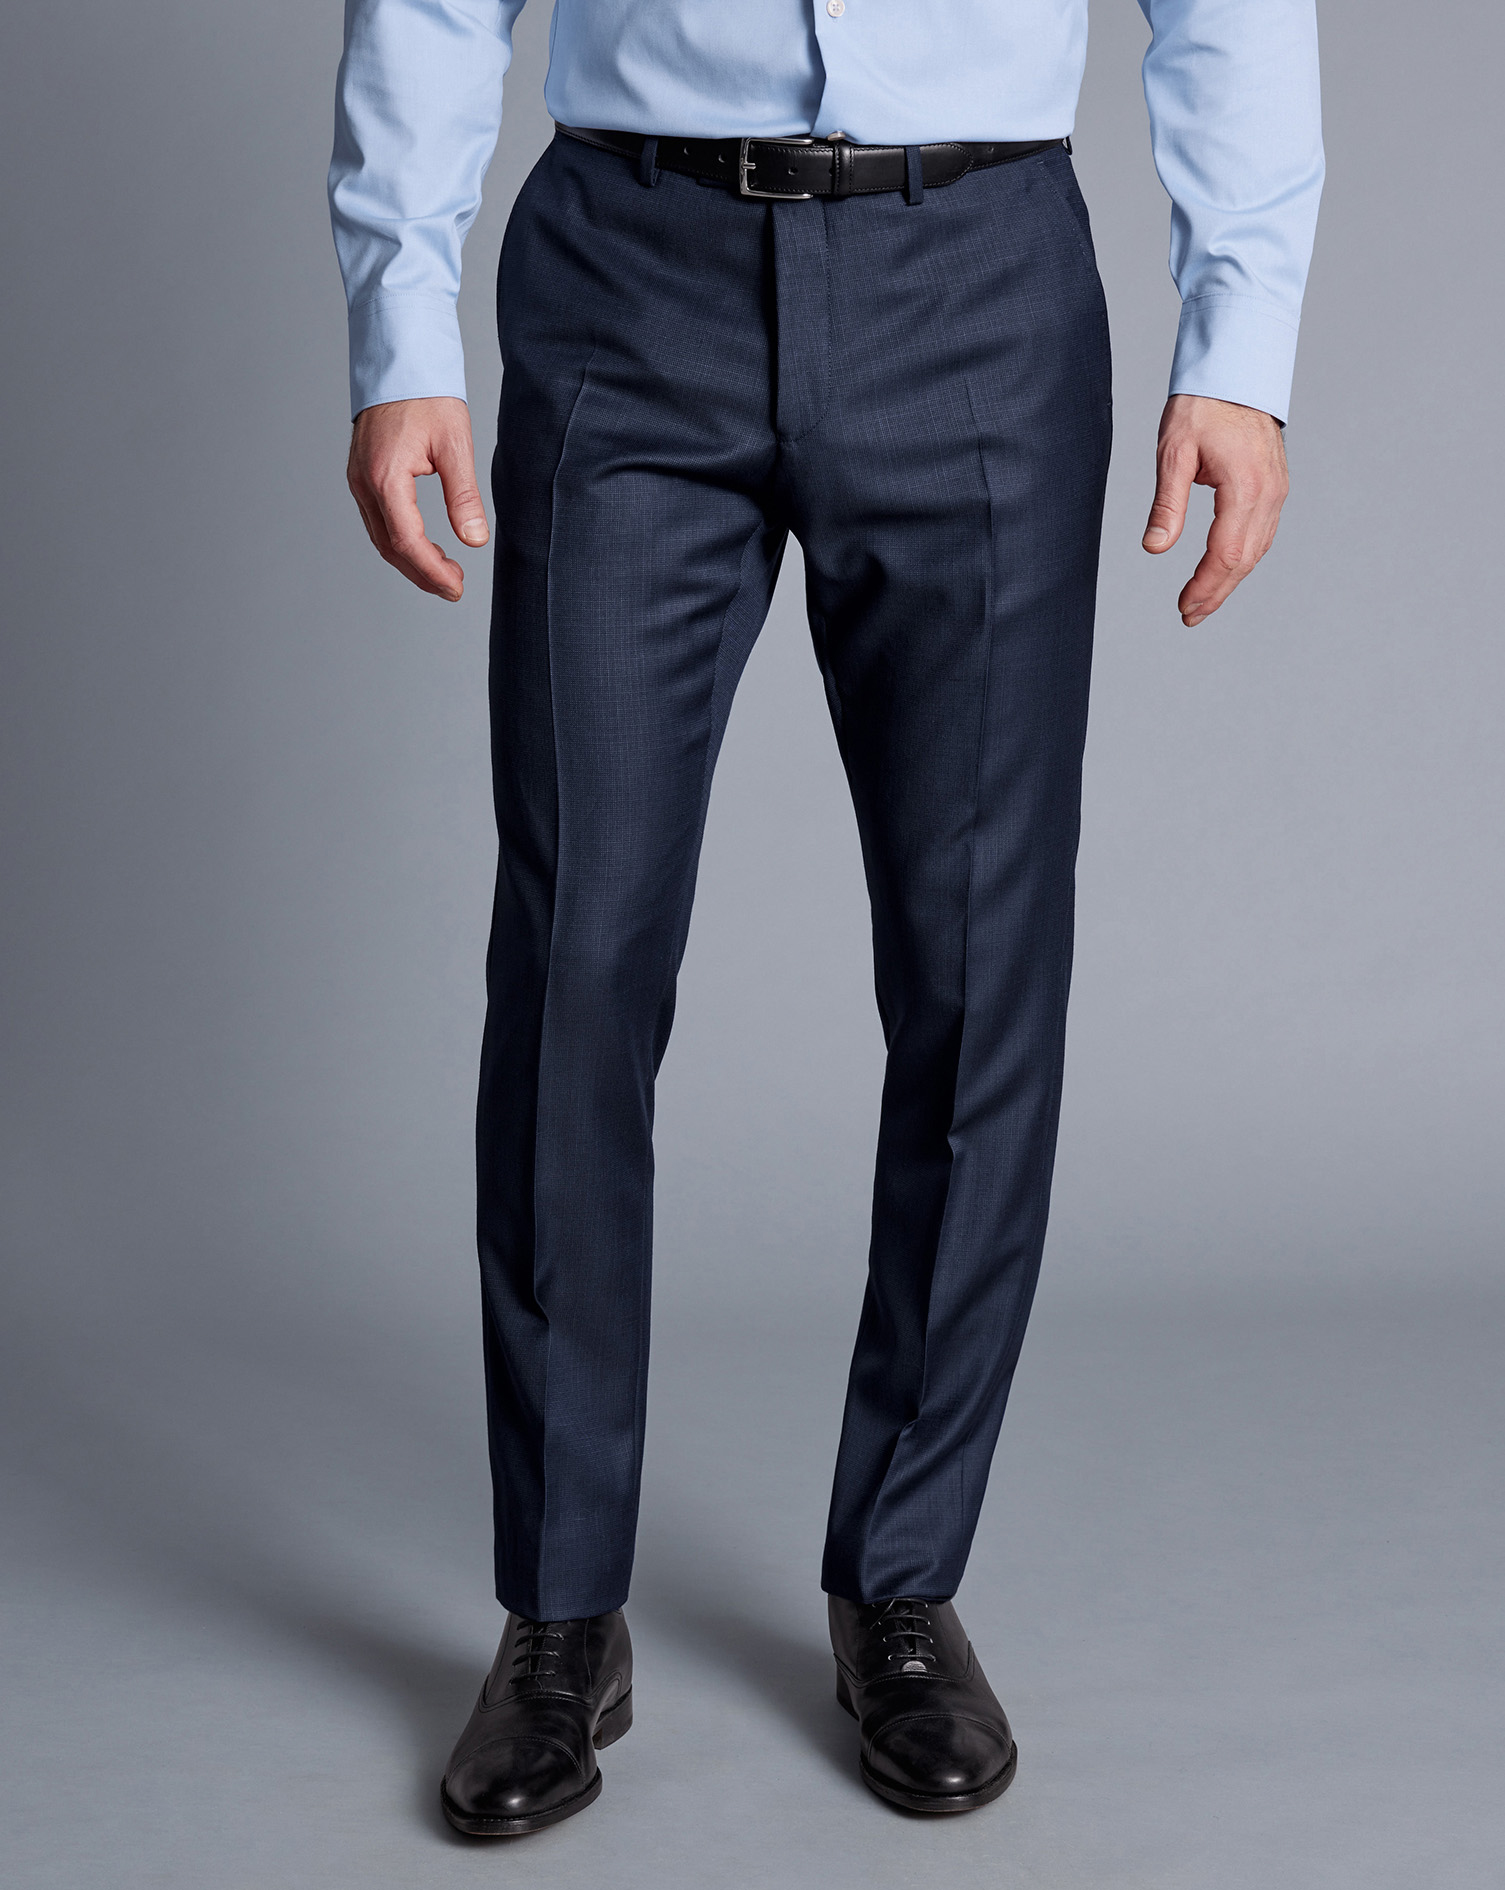 Men's Charles Tyrwhitt Italian Luxury Textured Suit Trousers - Ink Blue Size 30/38 Wool
